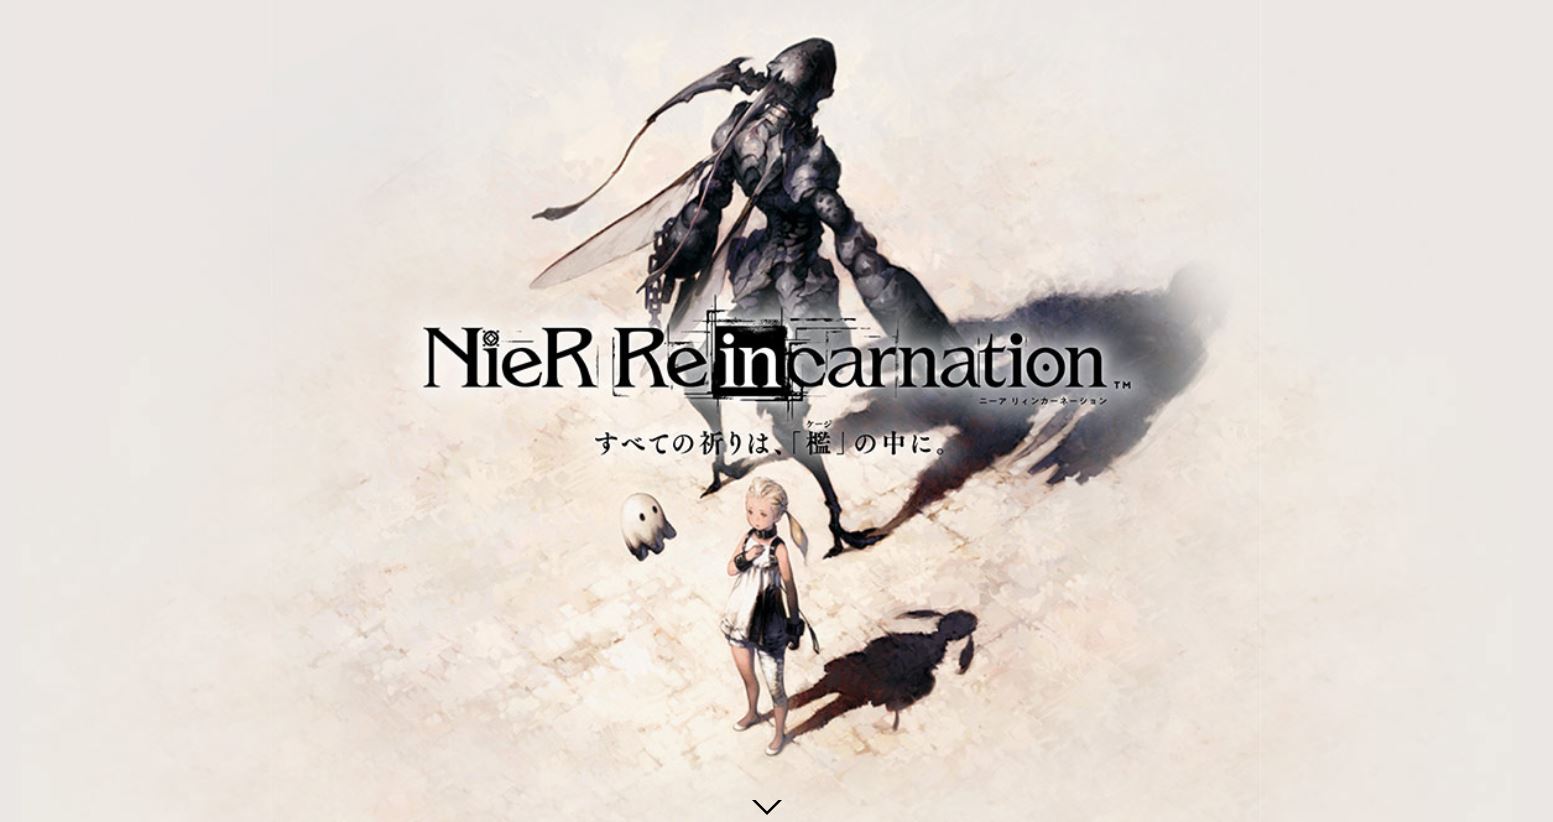 NieR Reincarnation 1372020 1